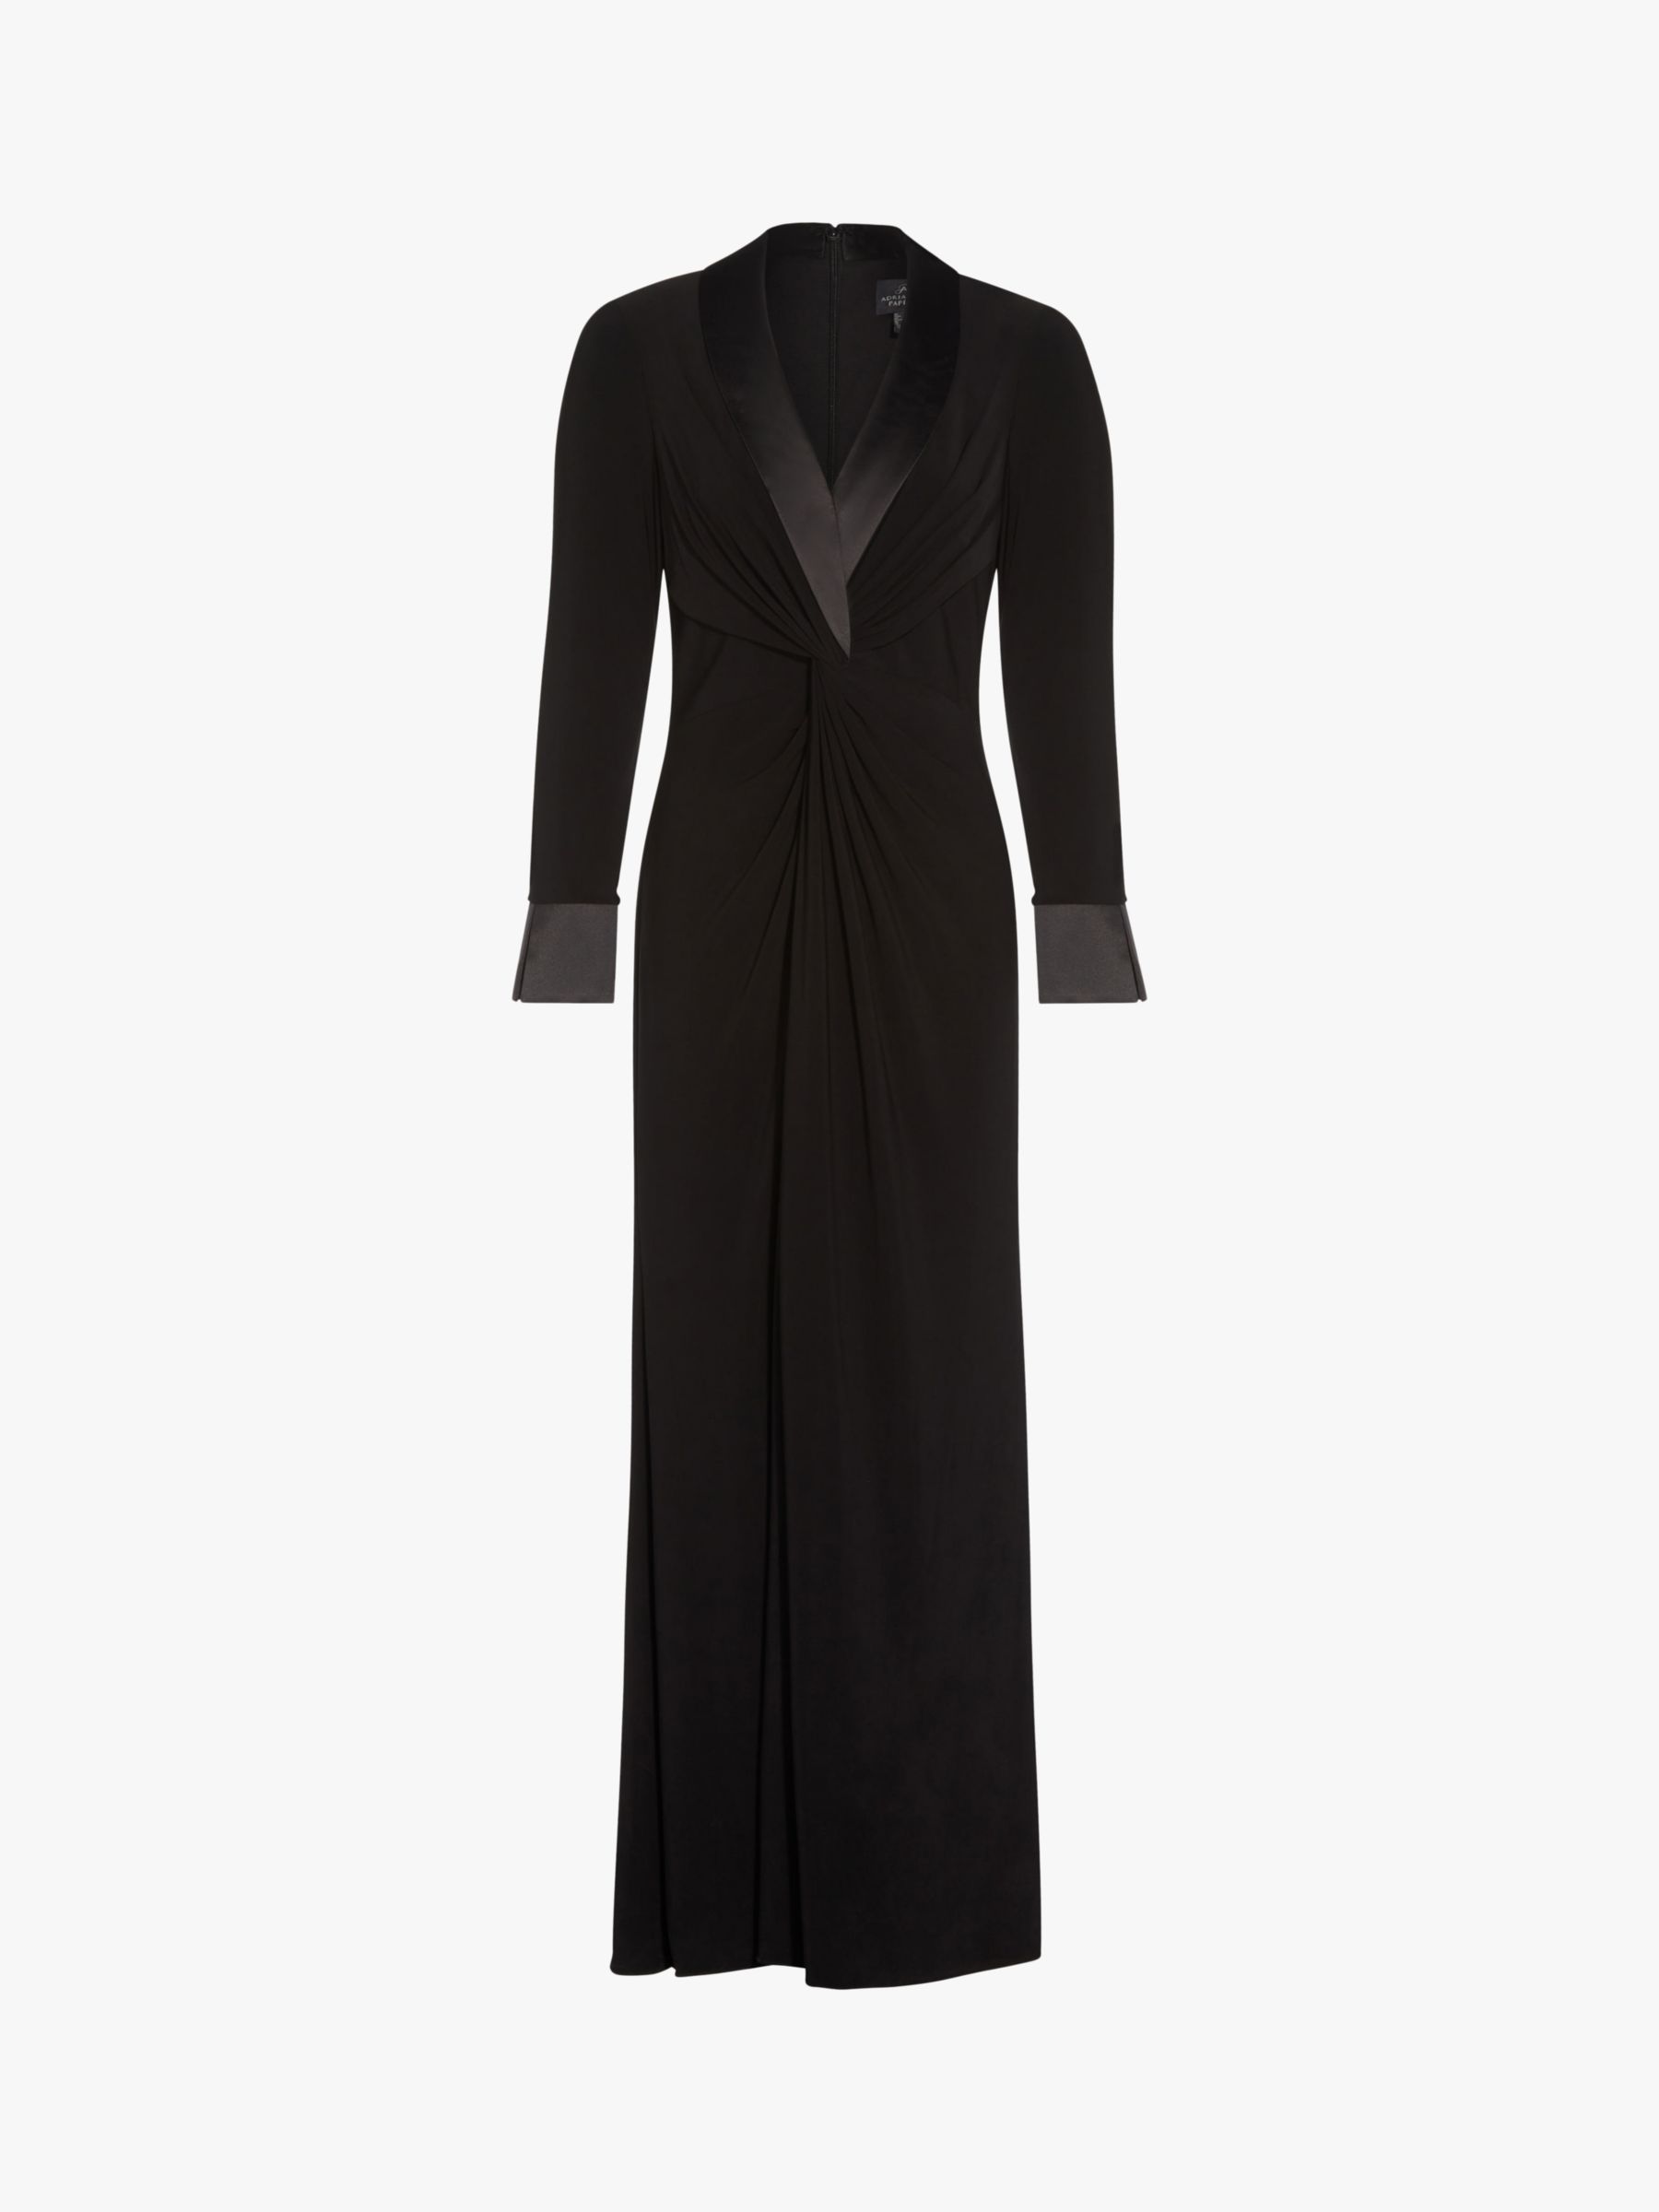 Adrianna Papell Tuxedo Dress, Black at John Lewis & Partners